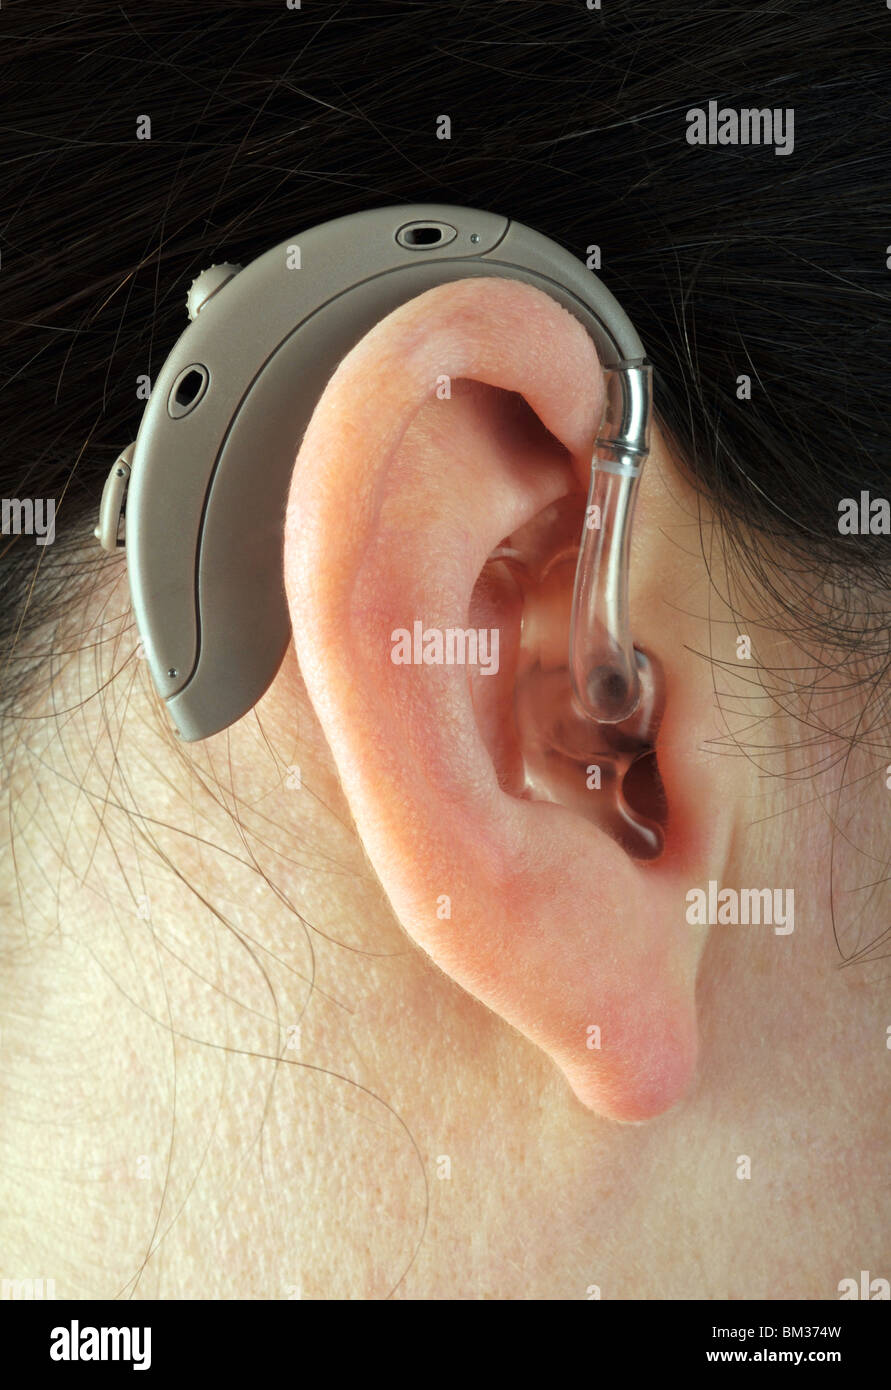 Digital hearing aid, hearing aid in a woman's ear Stock Photo